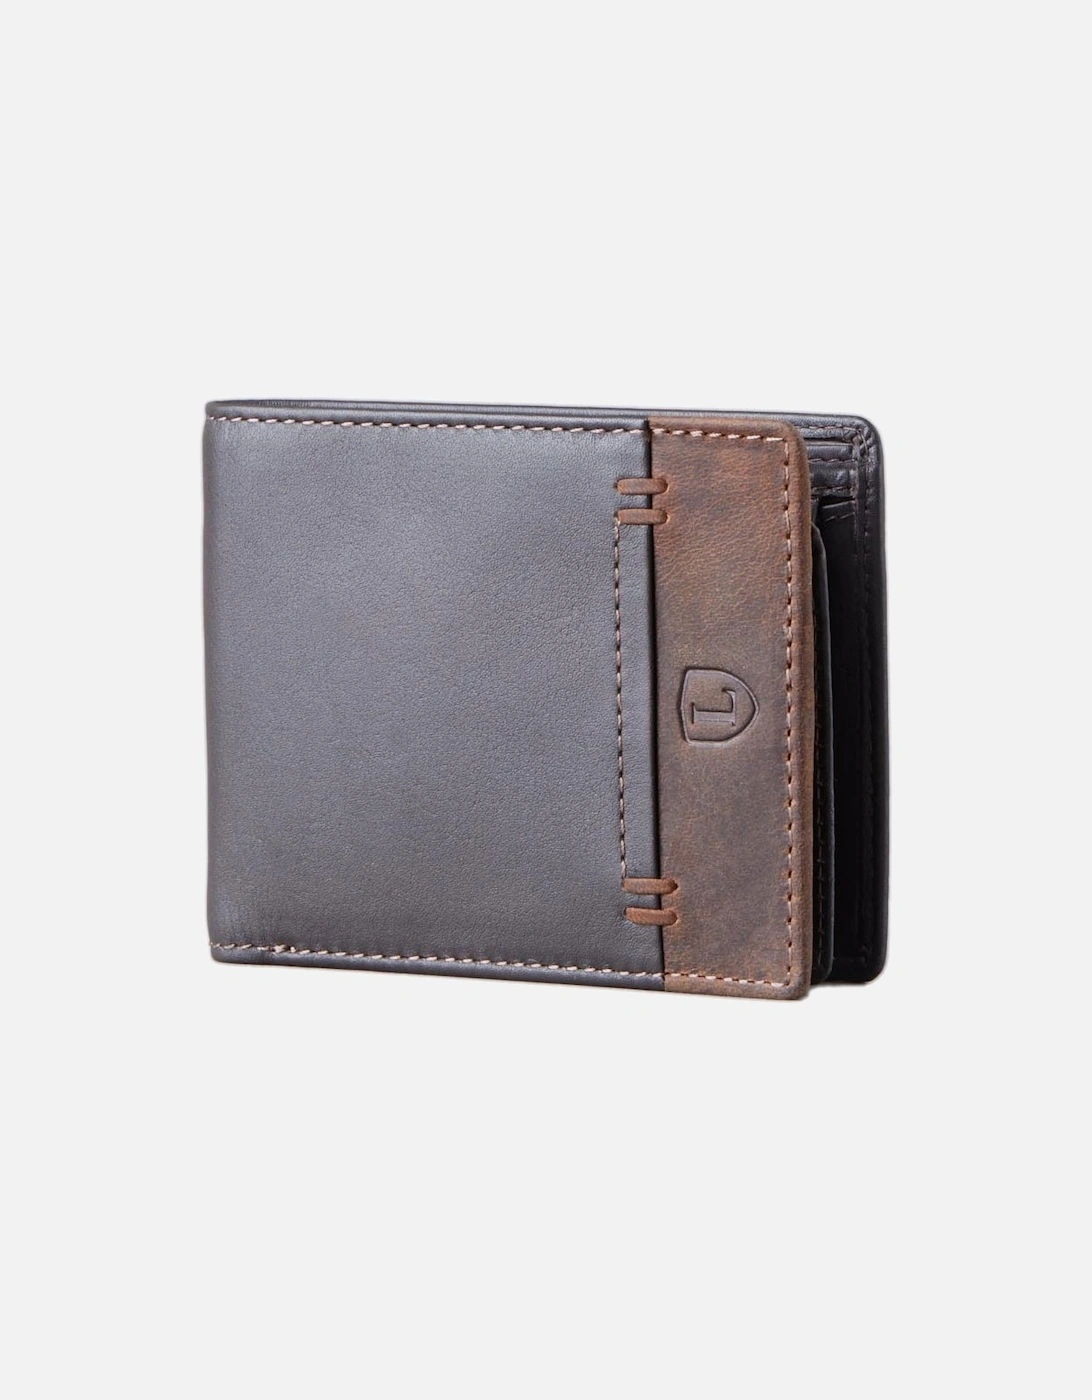 Stitch Leather Bi-Fold Wallet